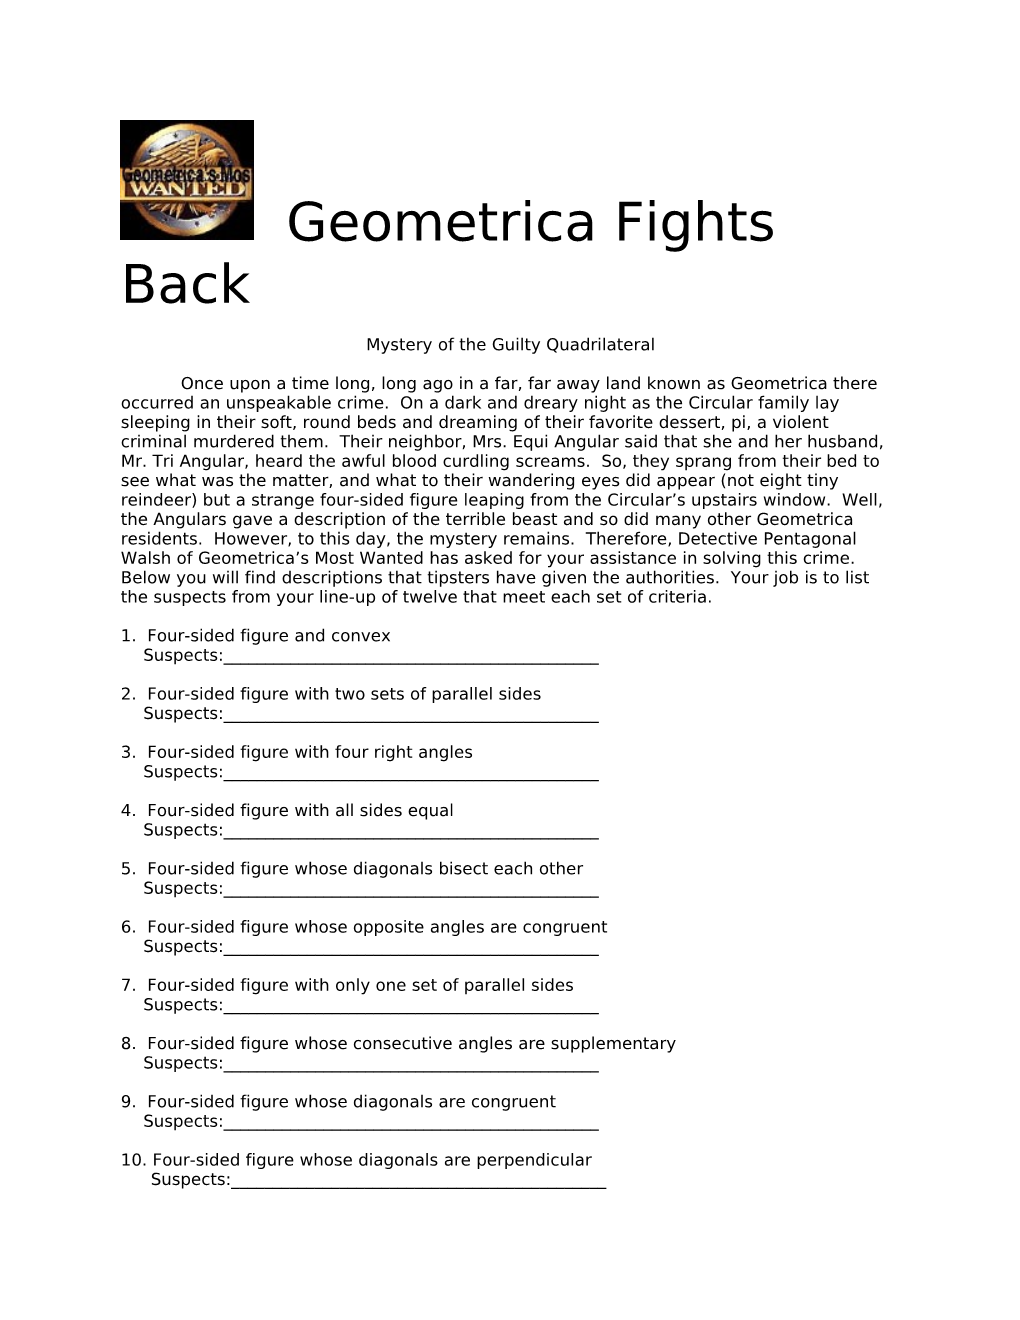 Geometrica Fights Back